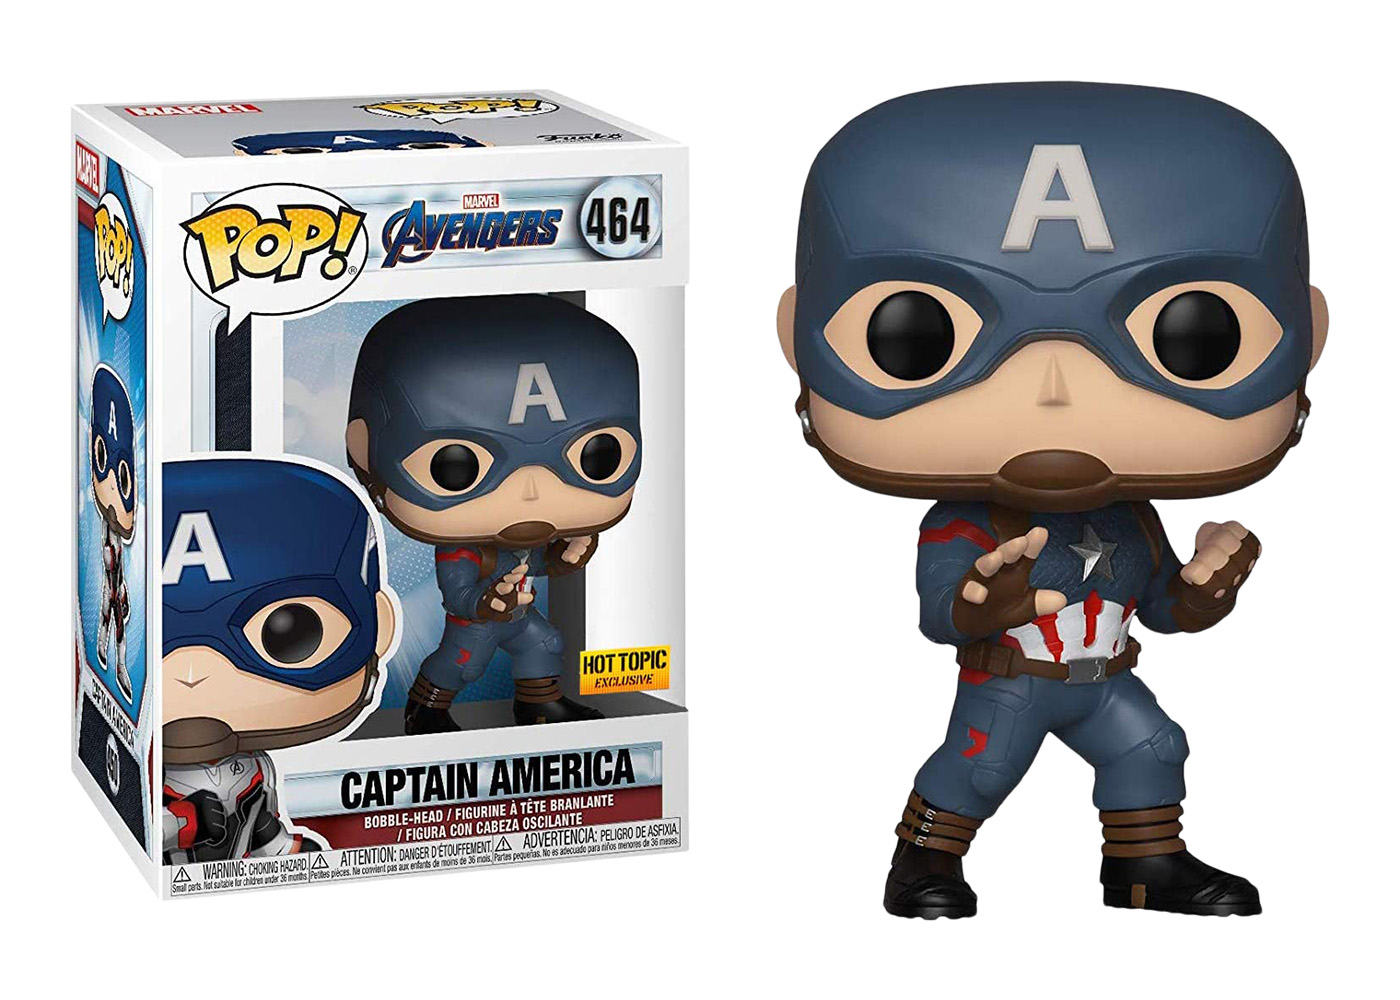 NEW Funko Pop Marvel Avengers Endgame Captain America #464 Hot Topic Exclusive 